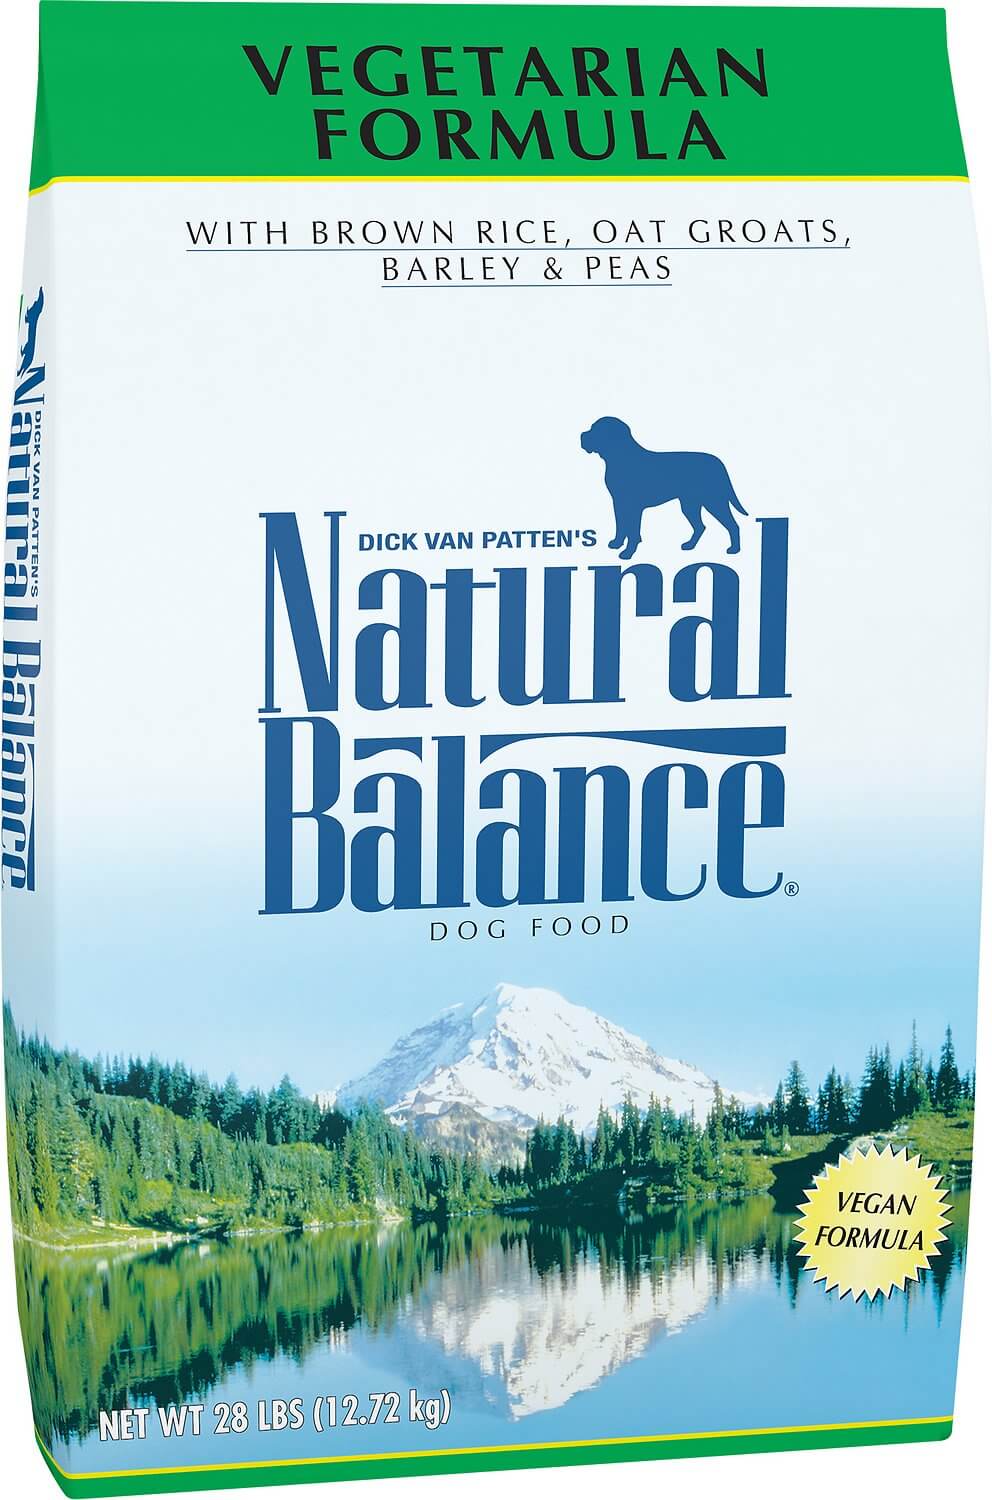 Natural Balance Vegetarian Dog Food Review (Canned)